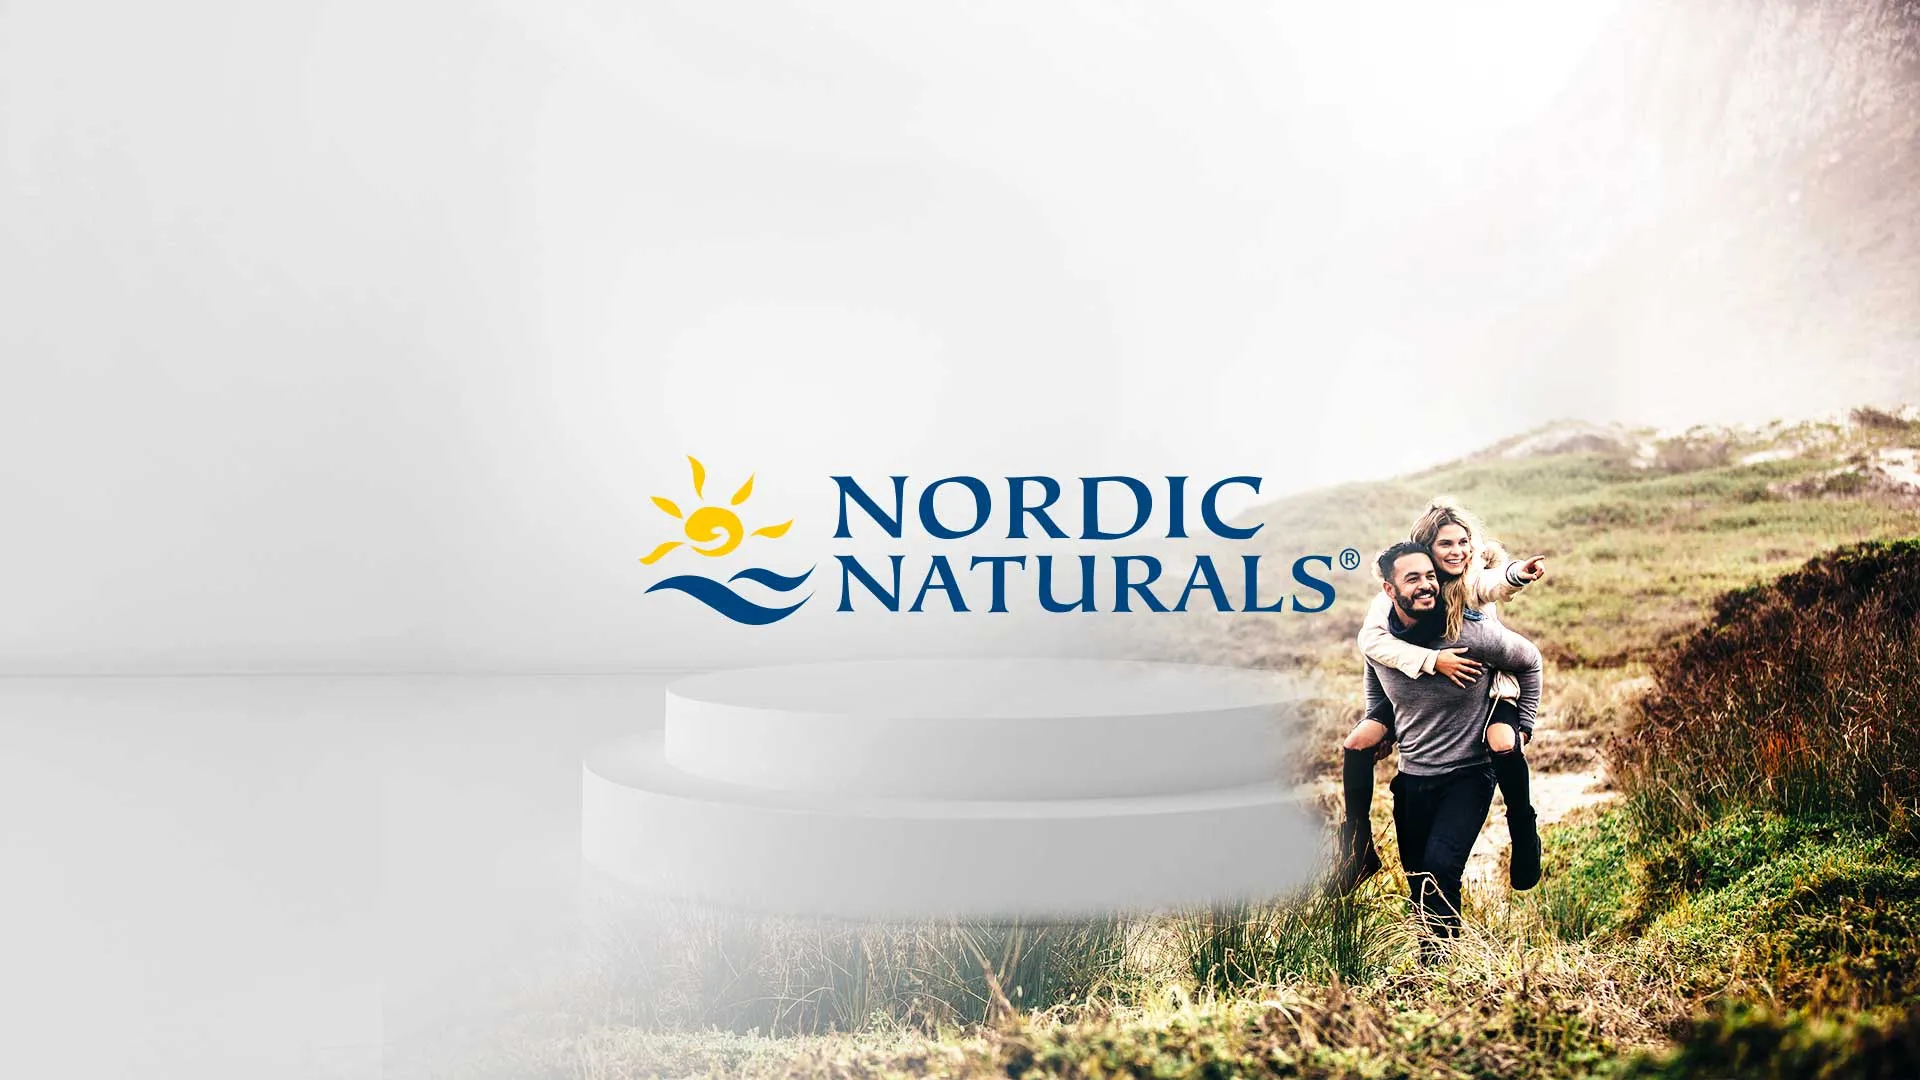 Wybieramy trzy bestsellery marki Nordic Naturals